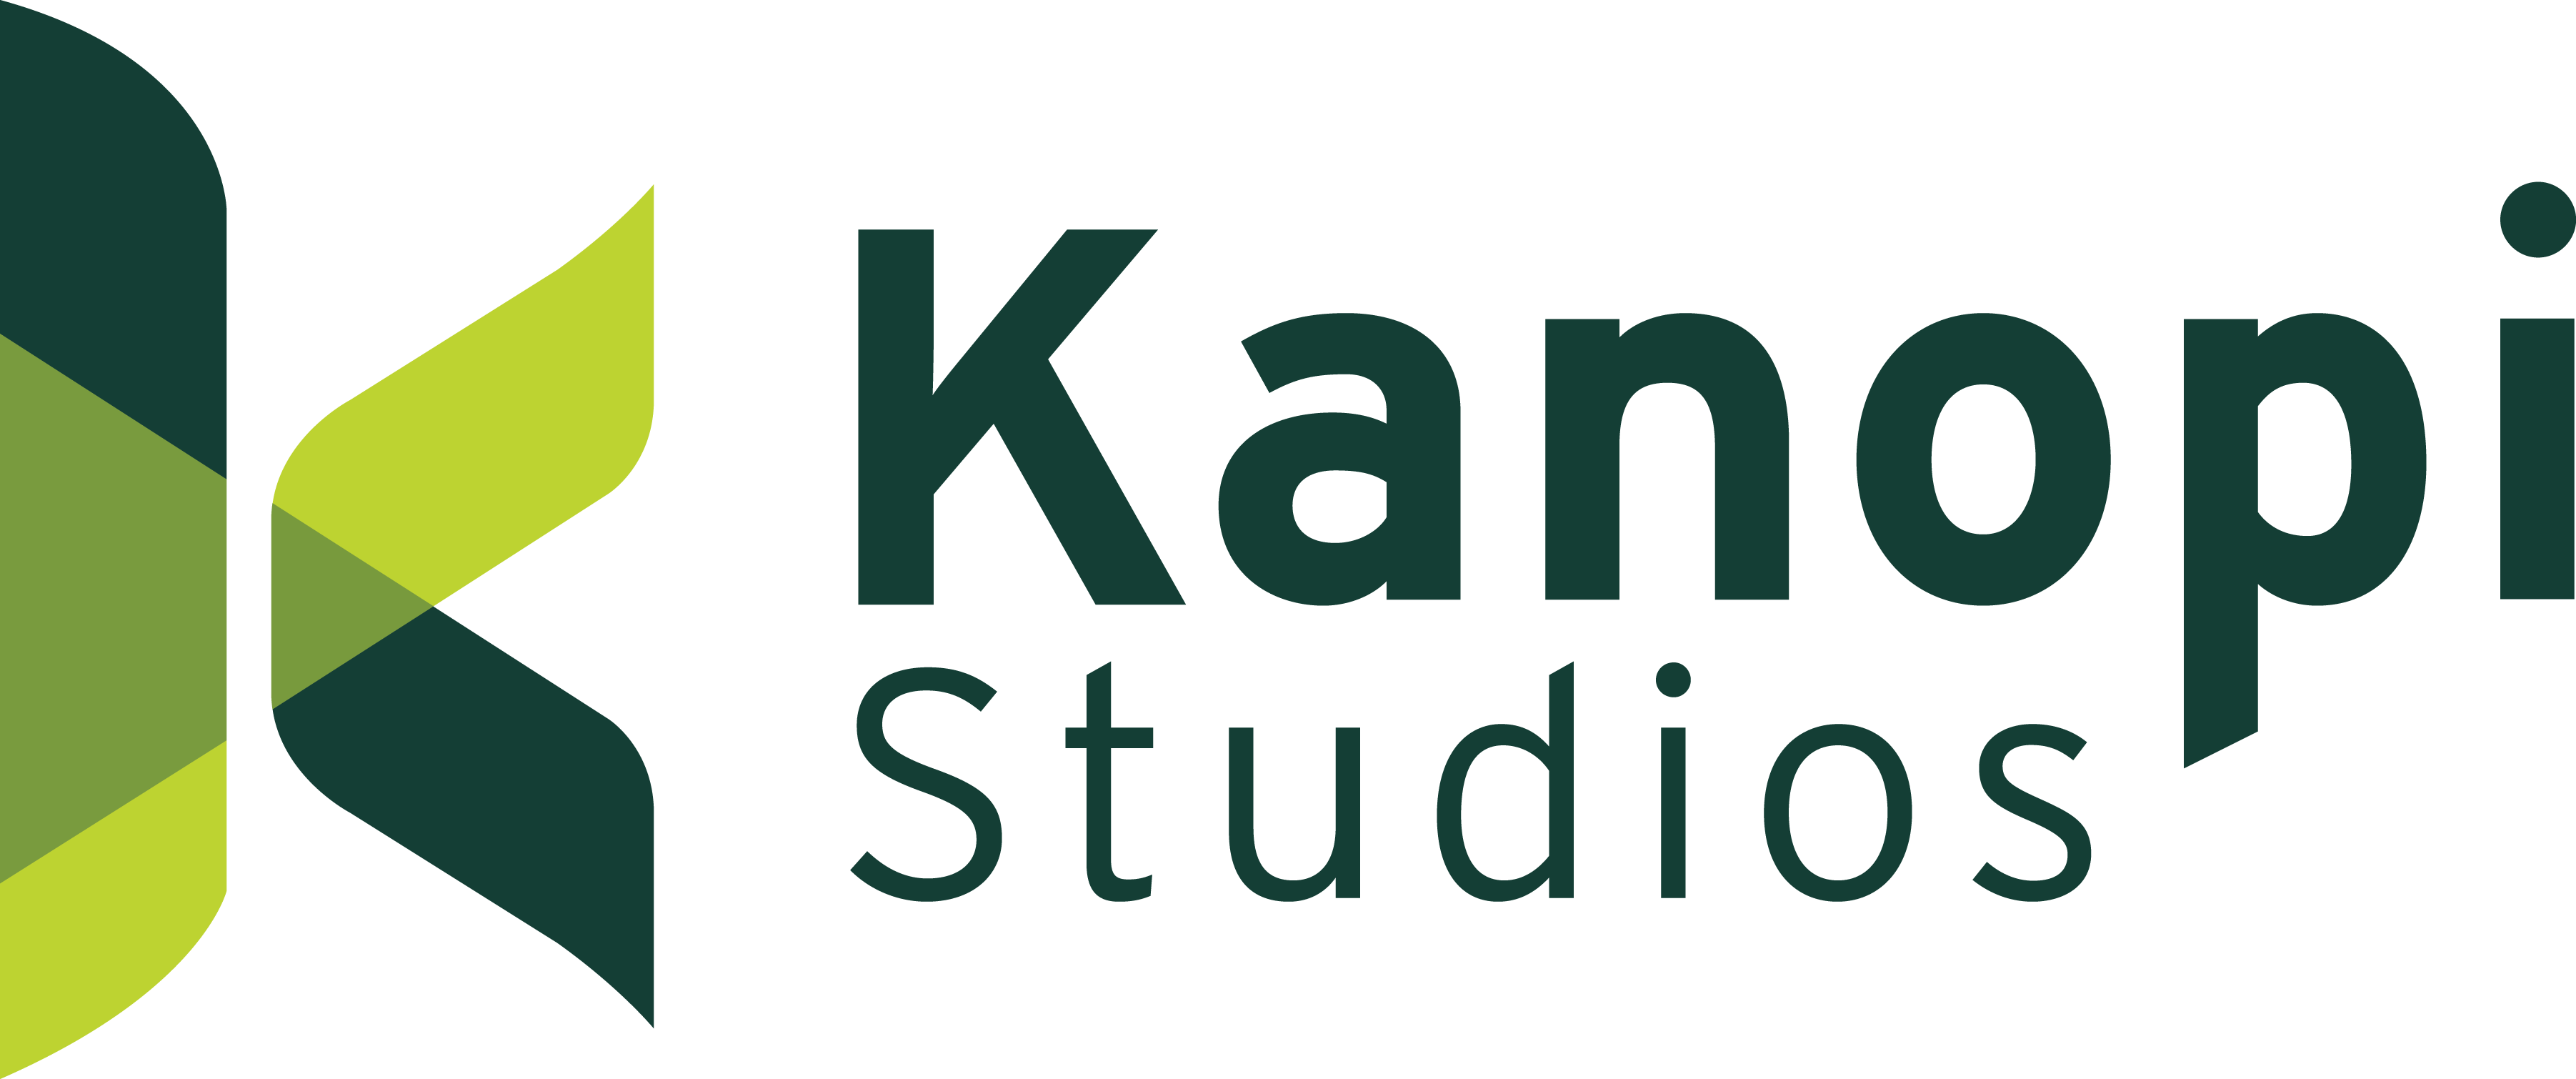 Kanopi Studios